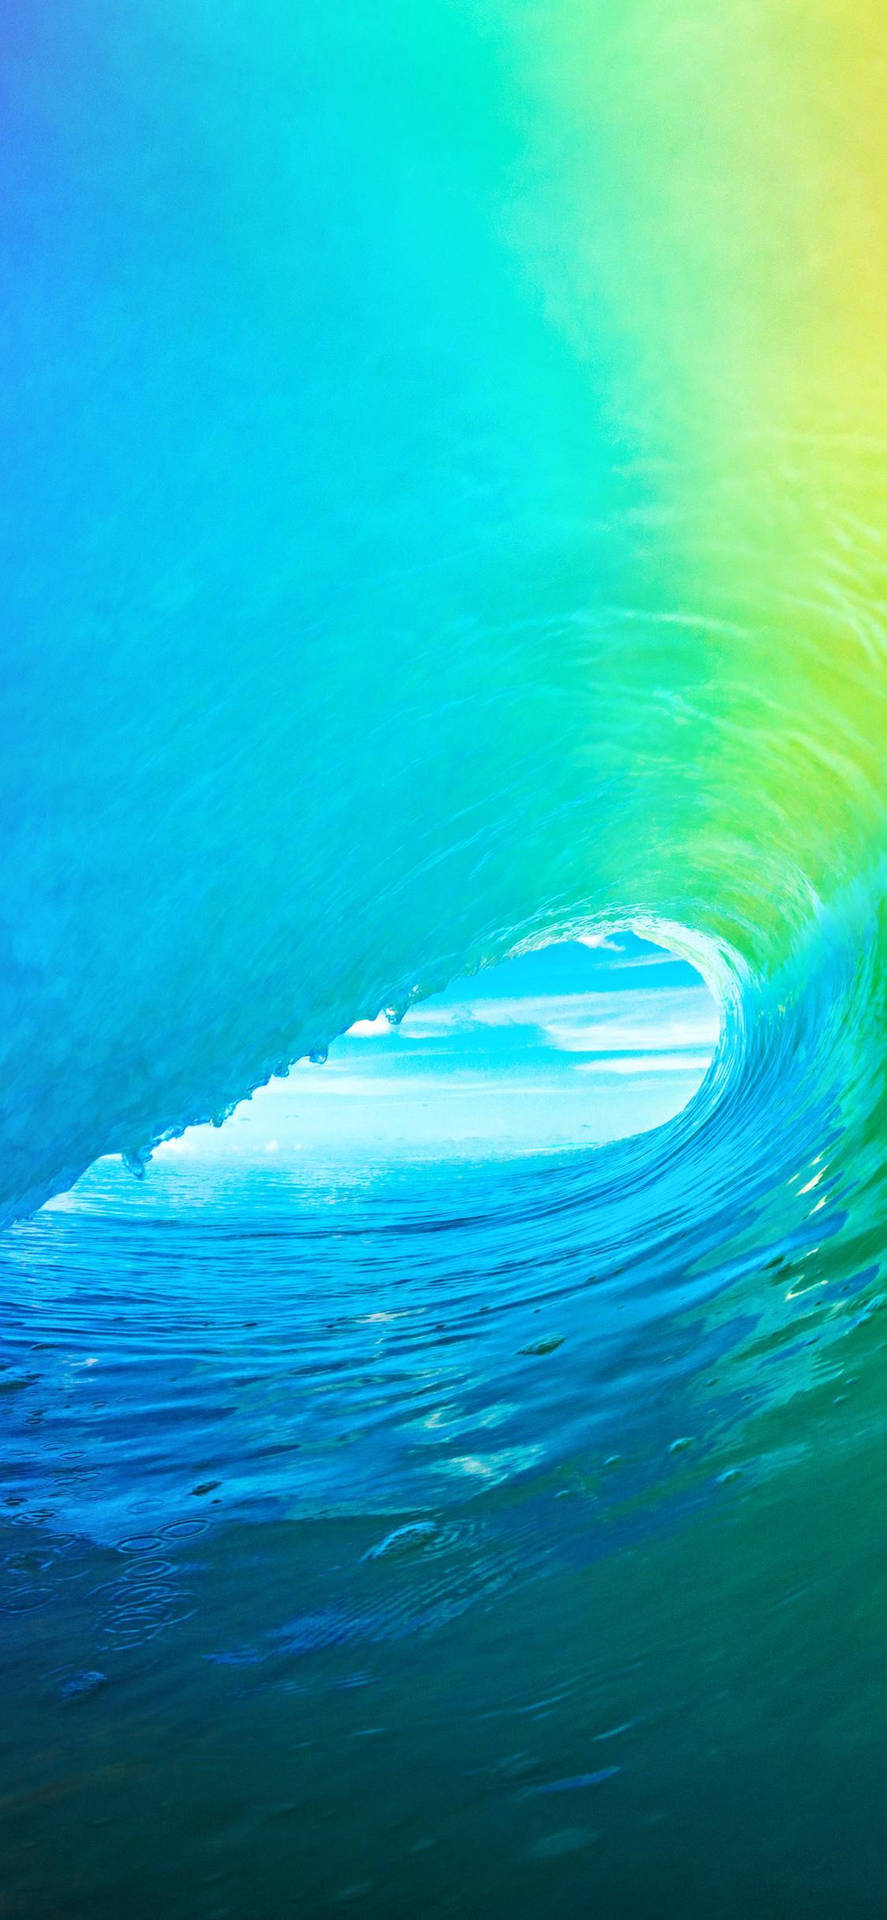 Iphonex Original Ocean Blue Waves Skulle Översättas Till Iphone X Original Ocean Blåa Vågor. Wallpaper